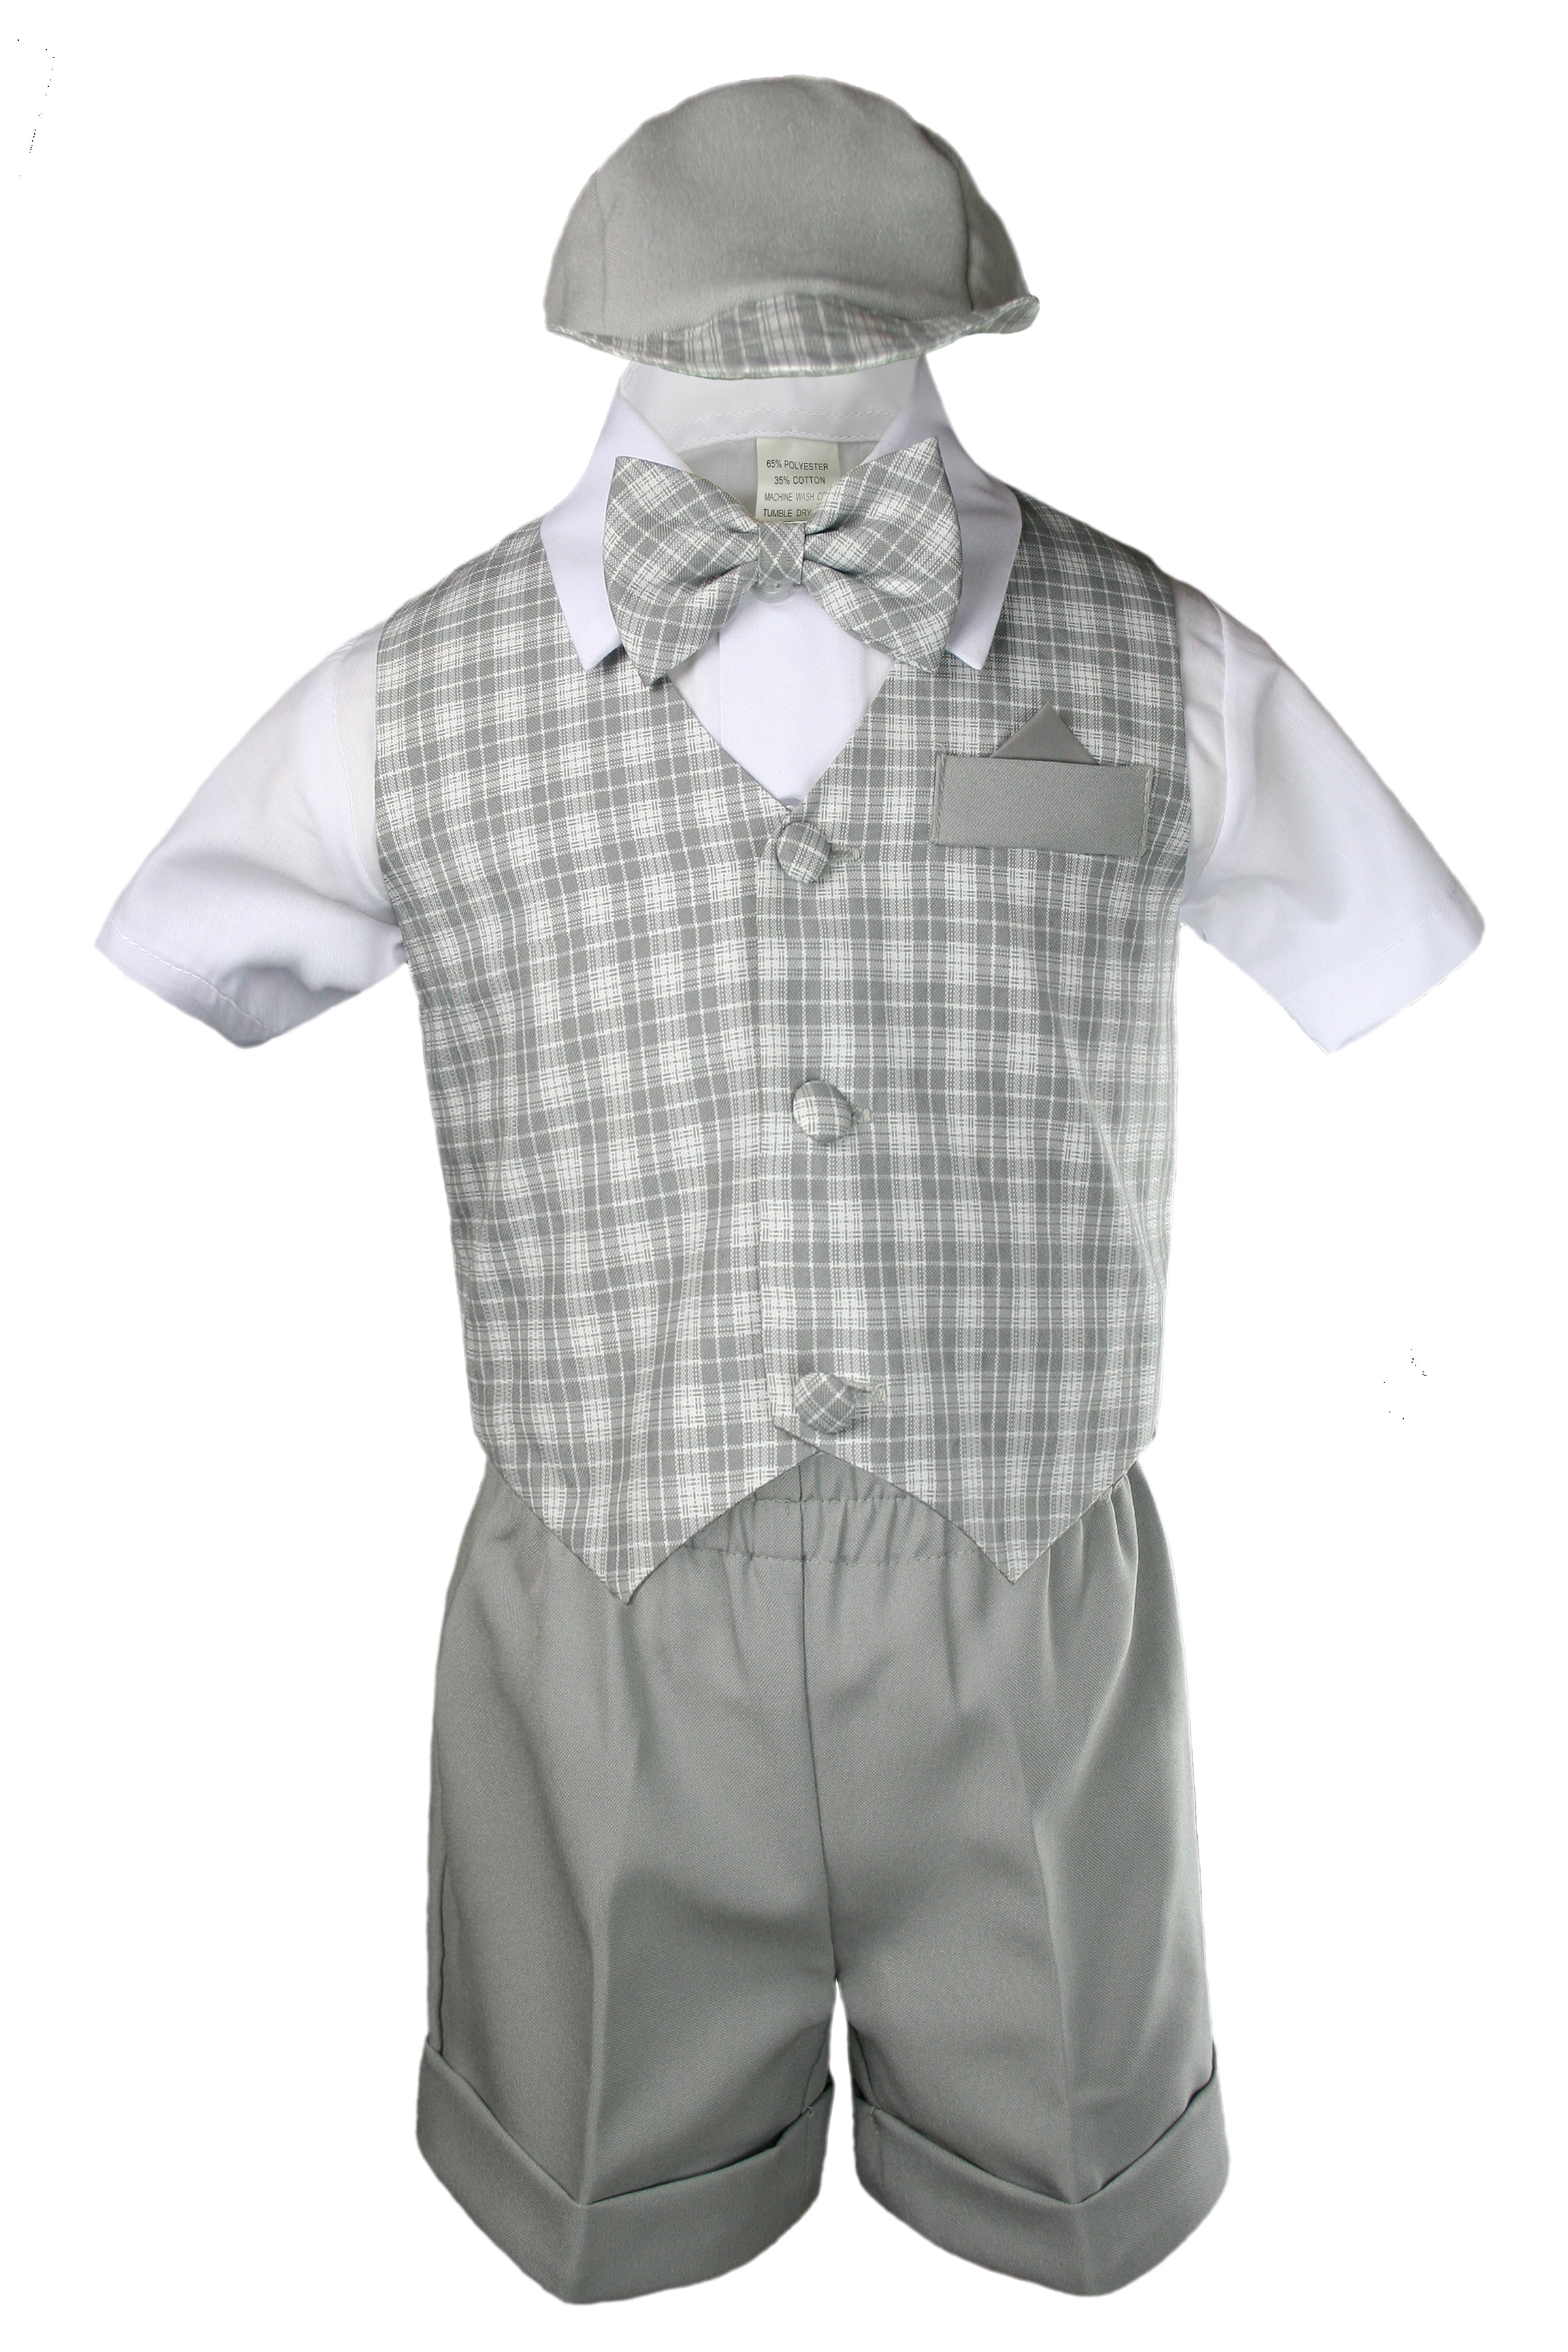 Baby Boy Toddler Wedding Checker Gingham Black Khaki Navy Formal Short Suit S-4T 